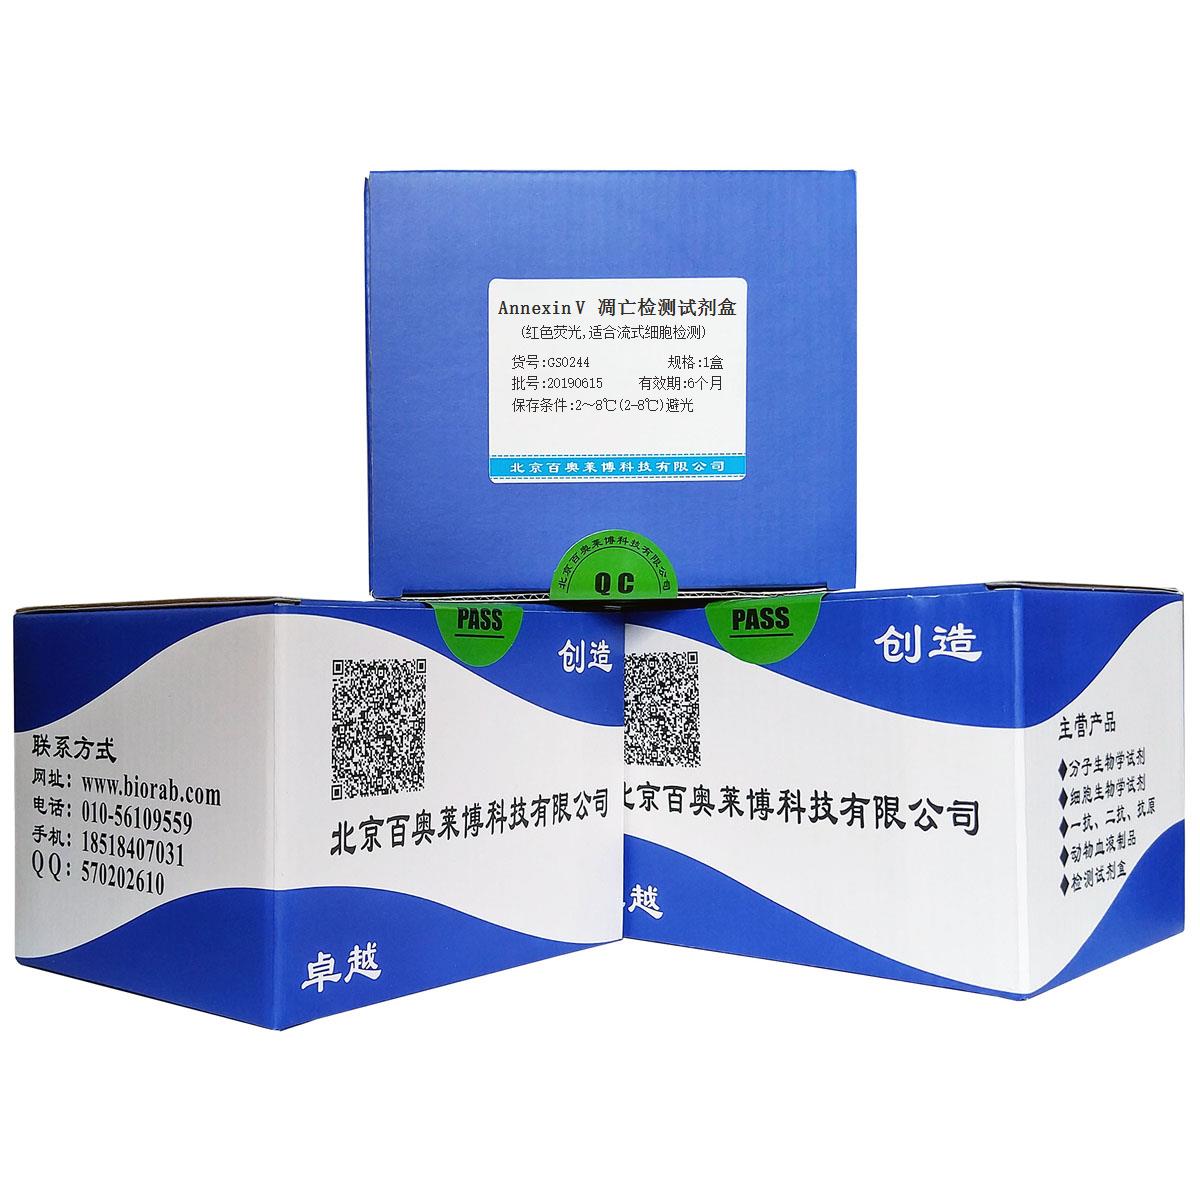 Annexin V 凋亡检测试剂盒(红色荧光,适合流式细胞检测)